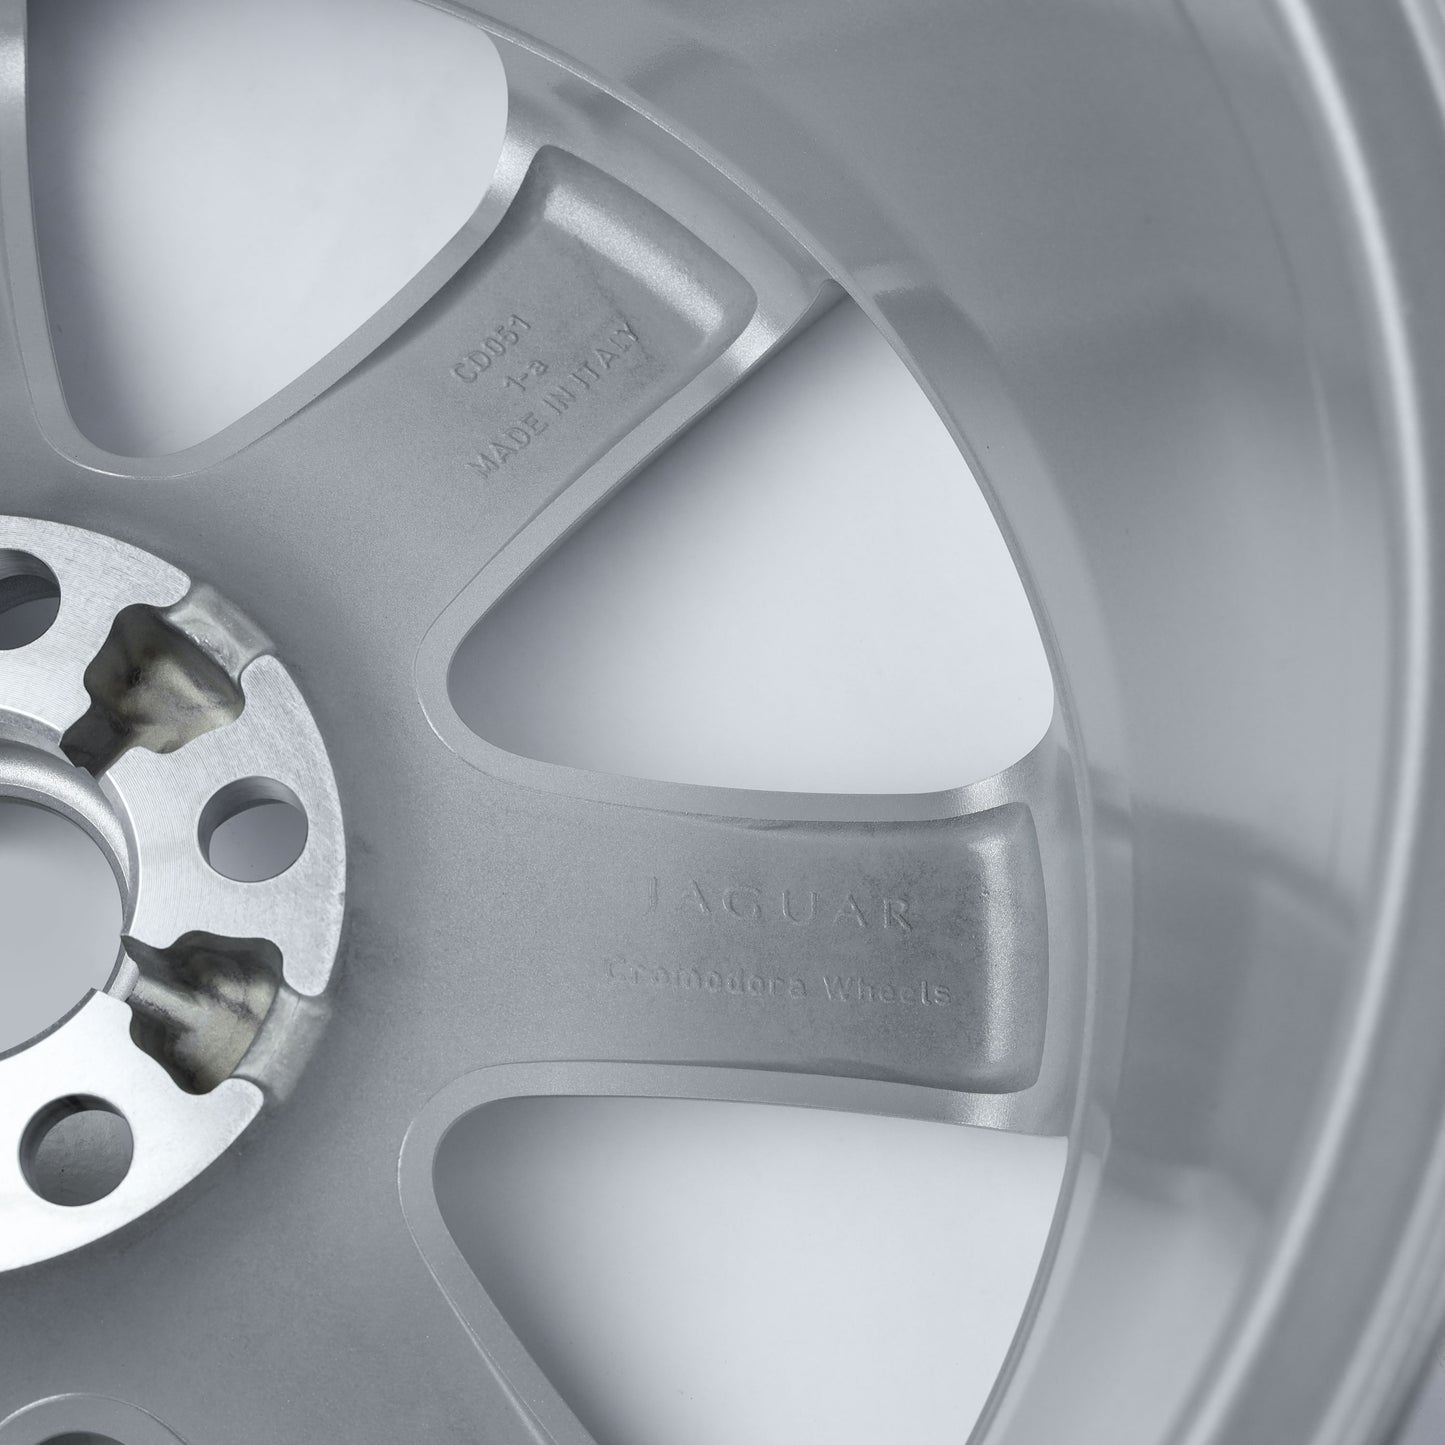 1x Genuine 18" Venus Alloy Wheel for Jaguar XF 2009-15